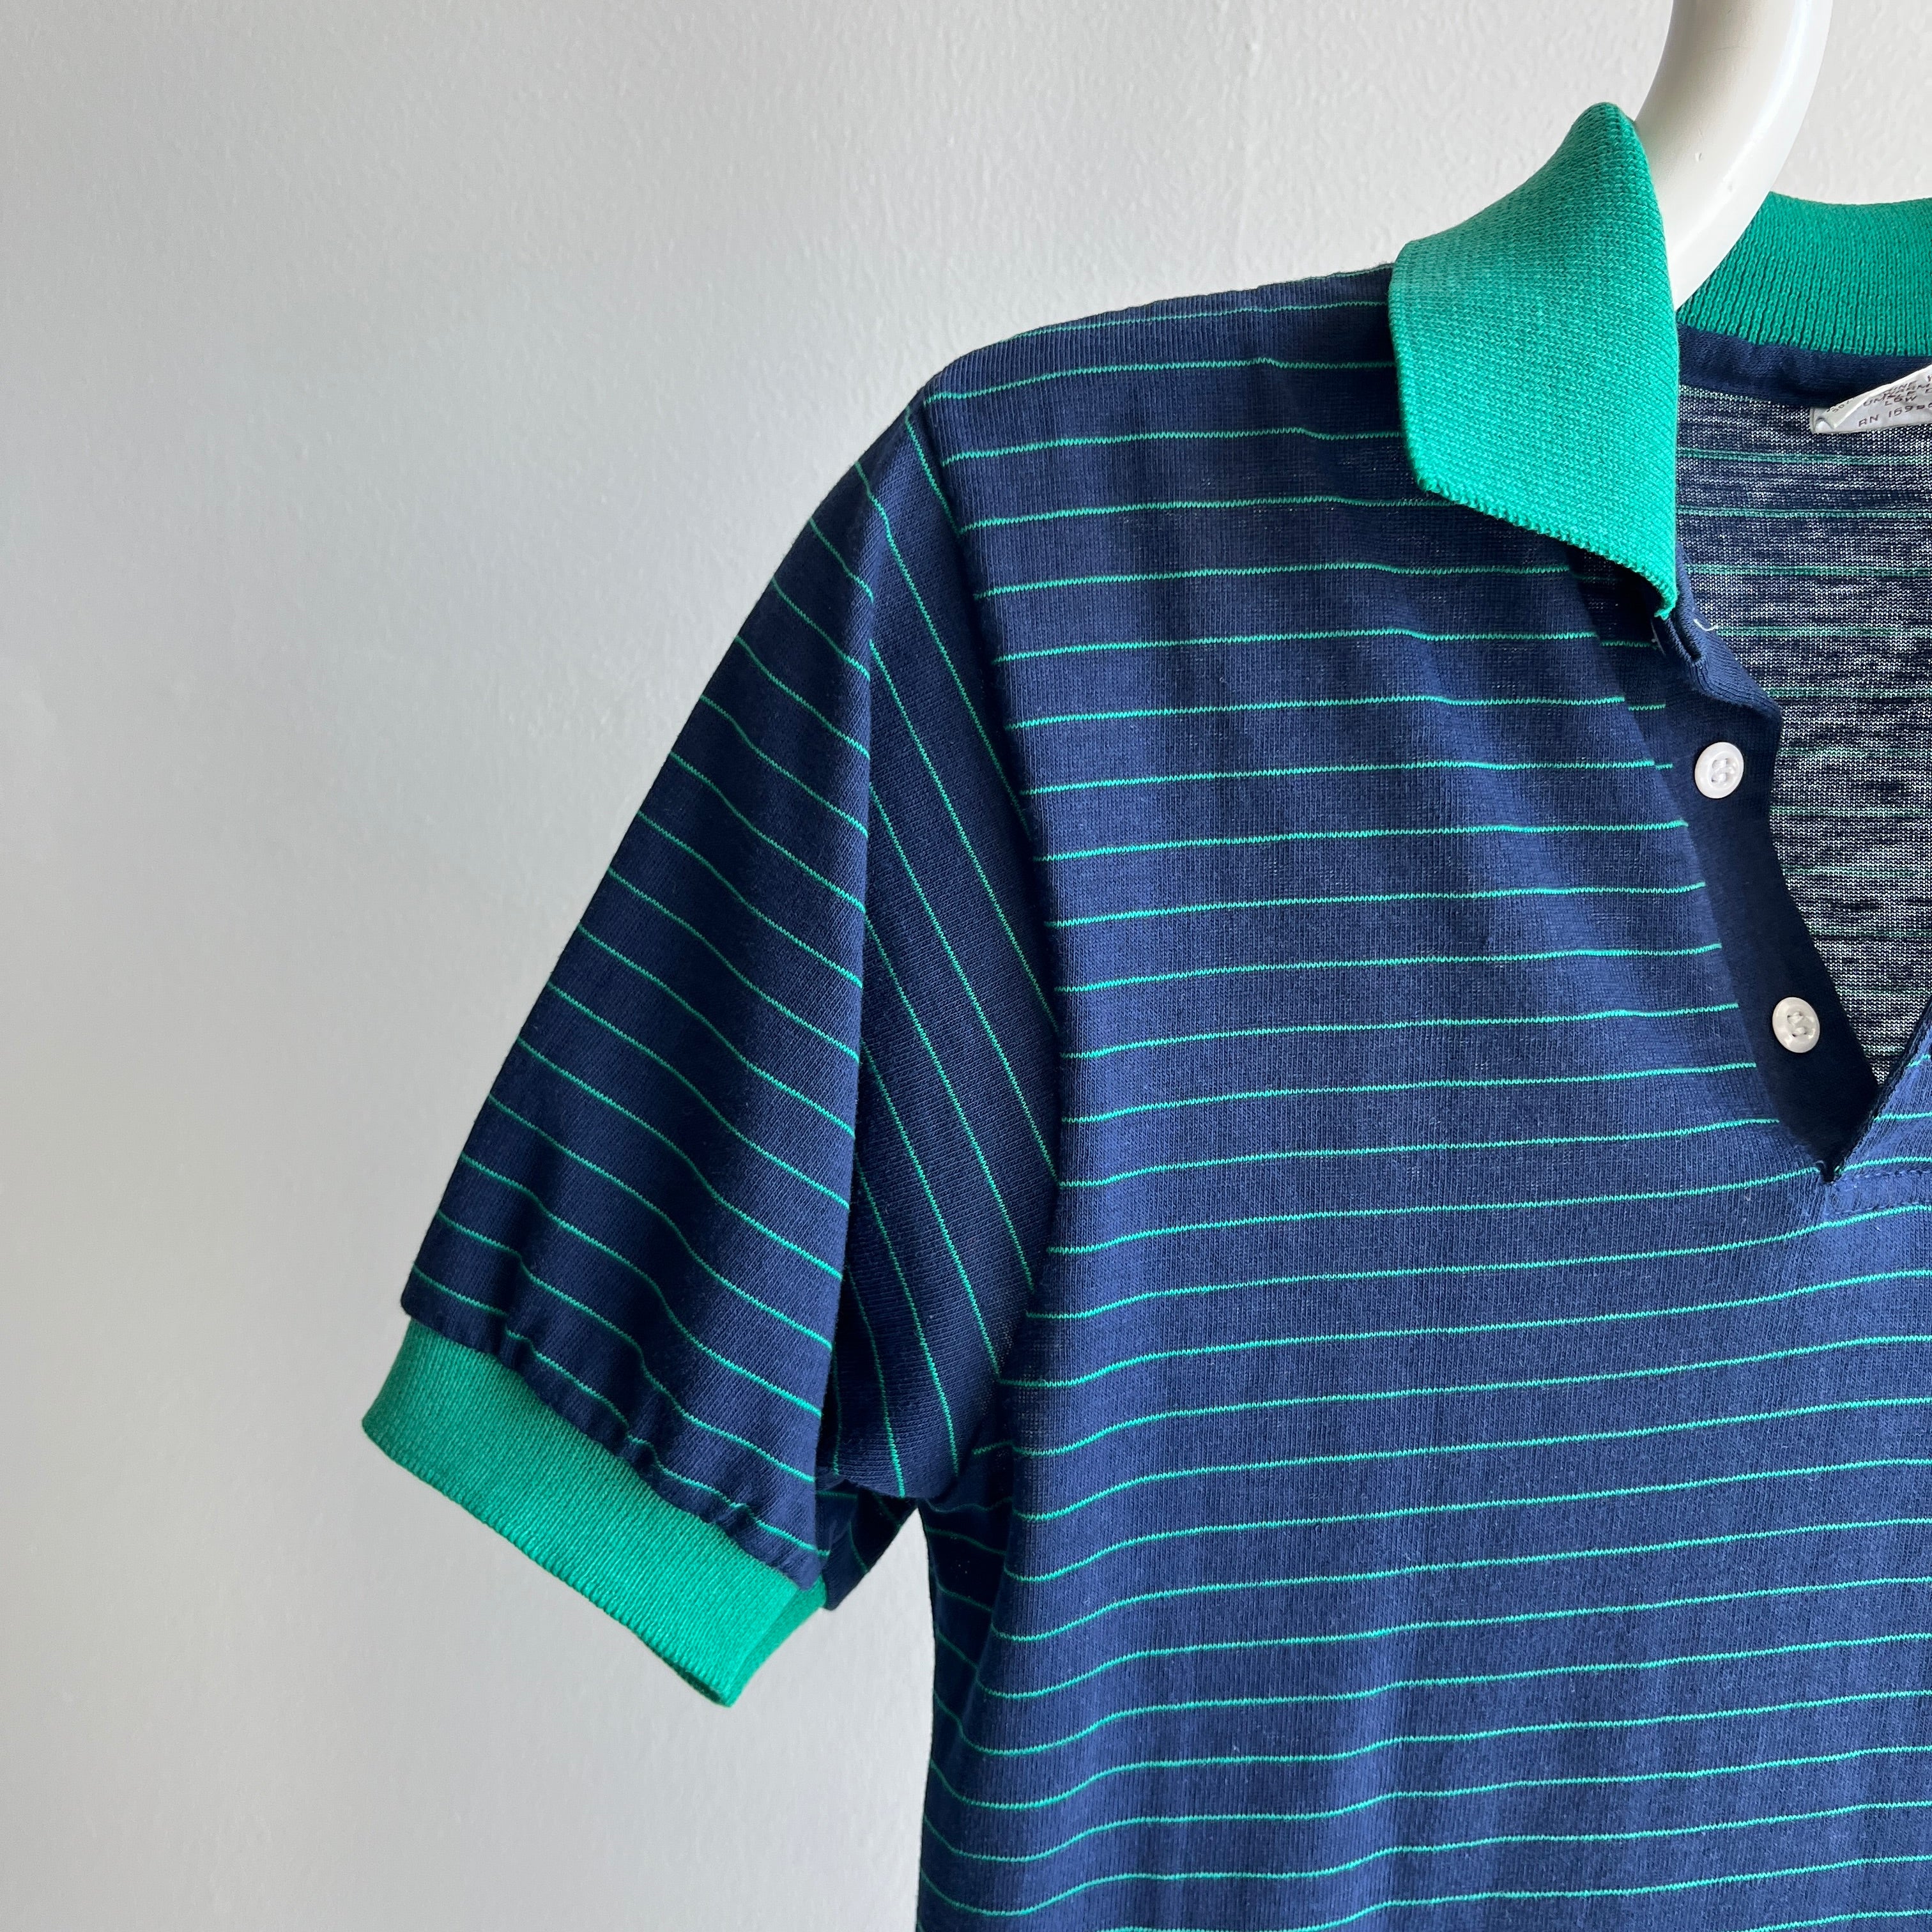 1980s Wonderful Thin Pinstriped Polo Shirt